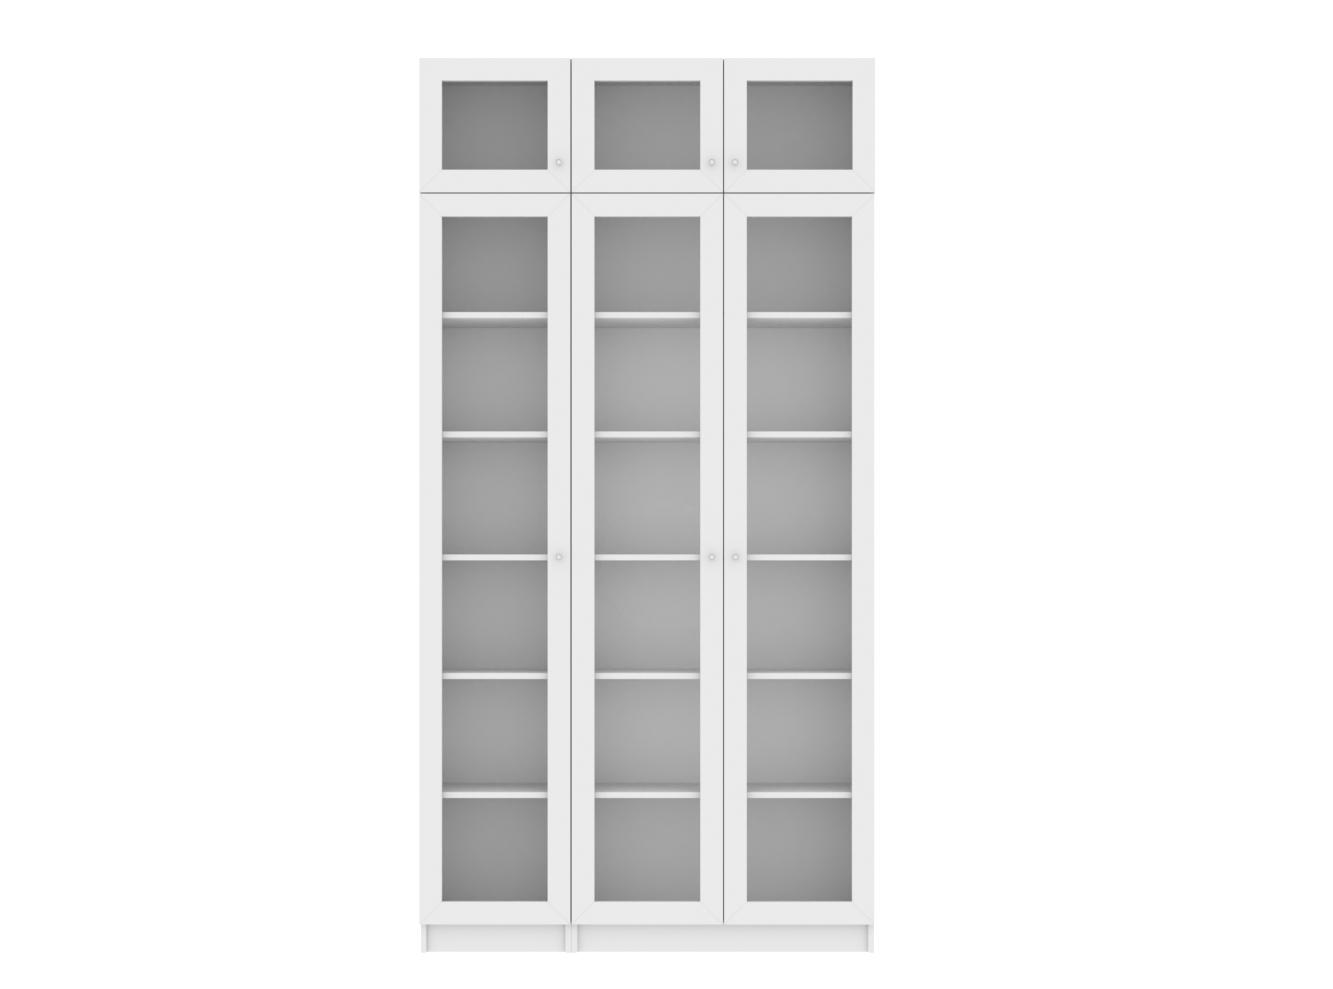  Книжный шкаф Билли 390 white ИКЕА (IKEA) изображение товара